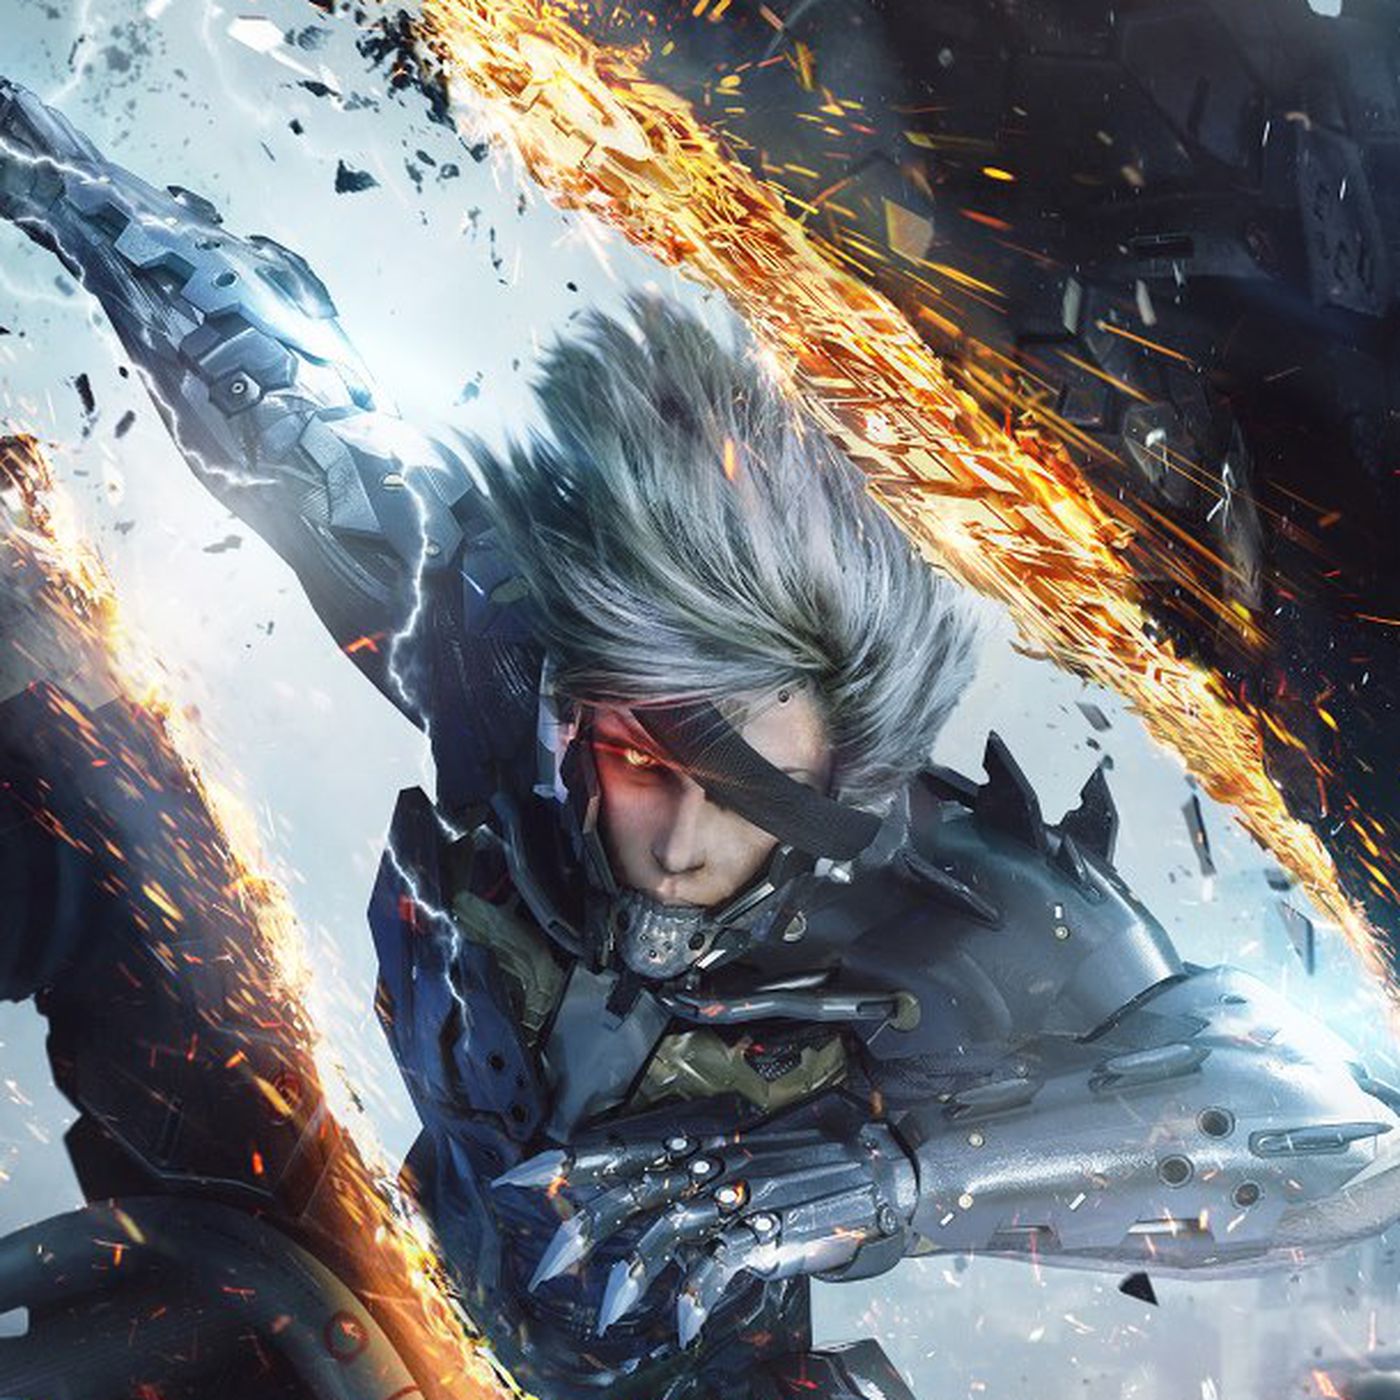 Metal Gear Rising: Revengeance Official Trailer 